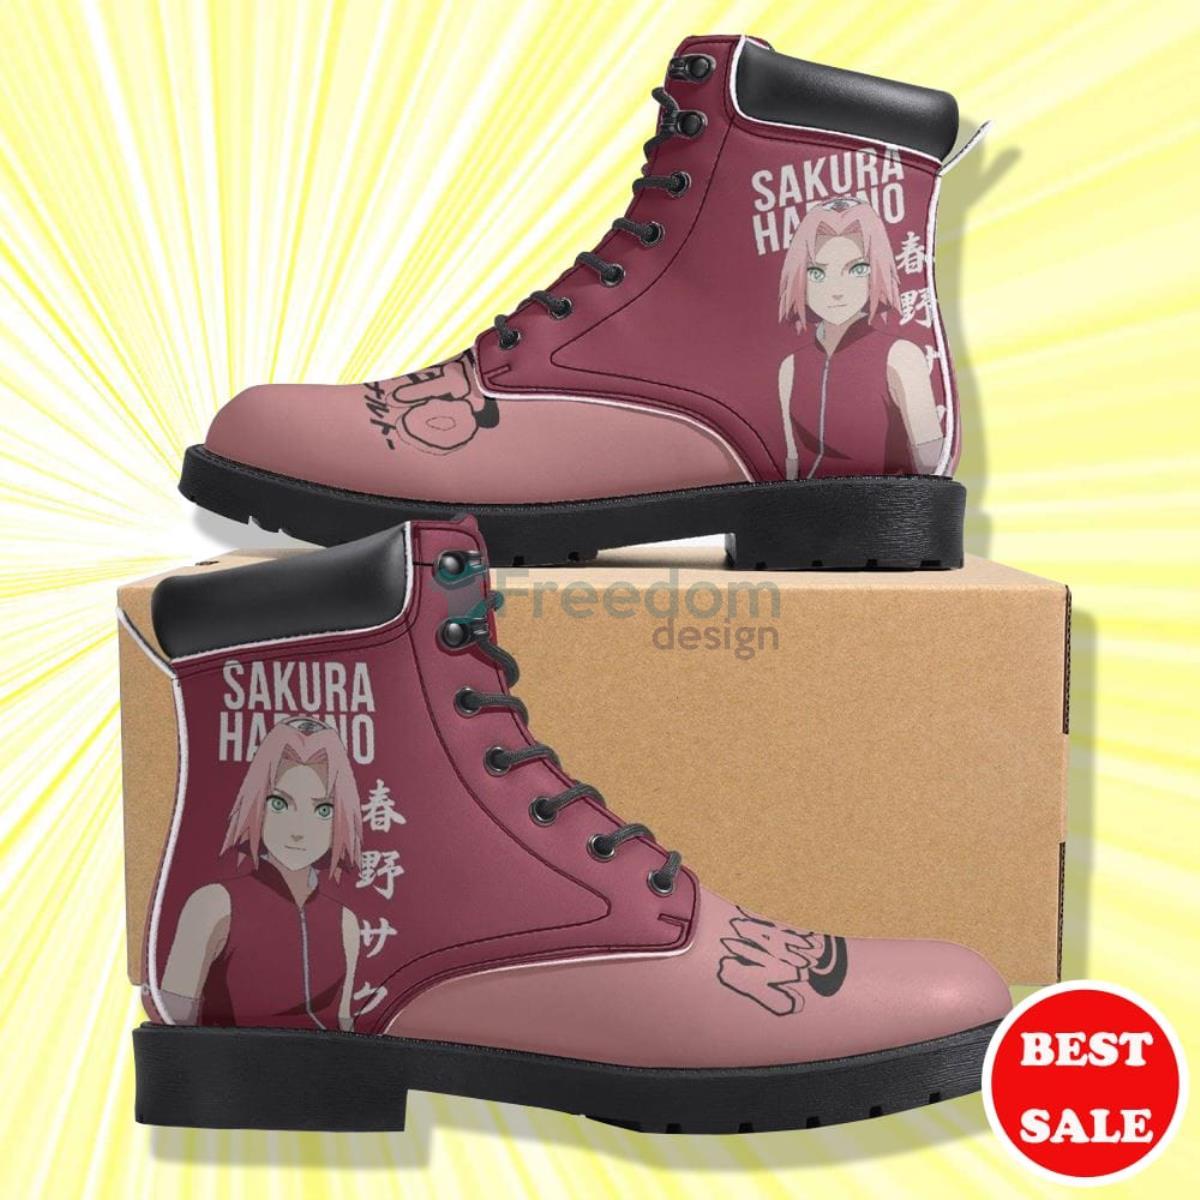 Naruto Shippuden Sakura Anime Leather Boots Product Photo 1